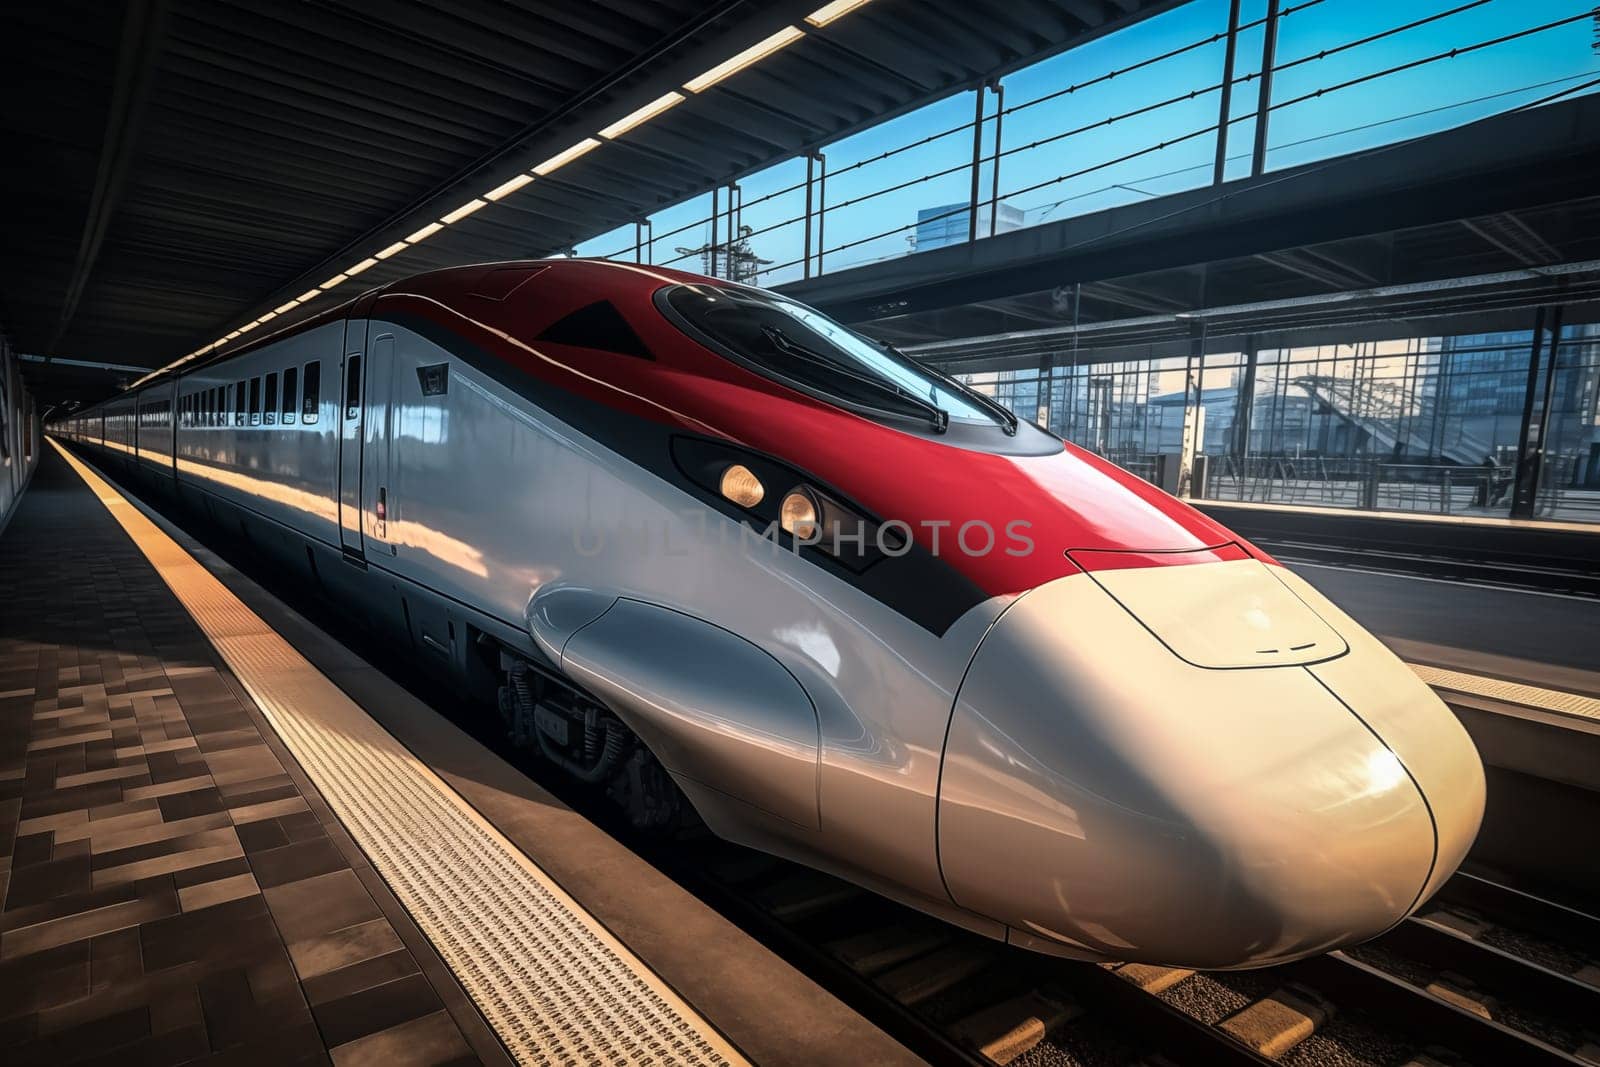 Modern high speed train in futuristic train station by dimol